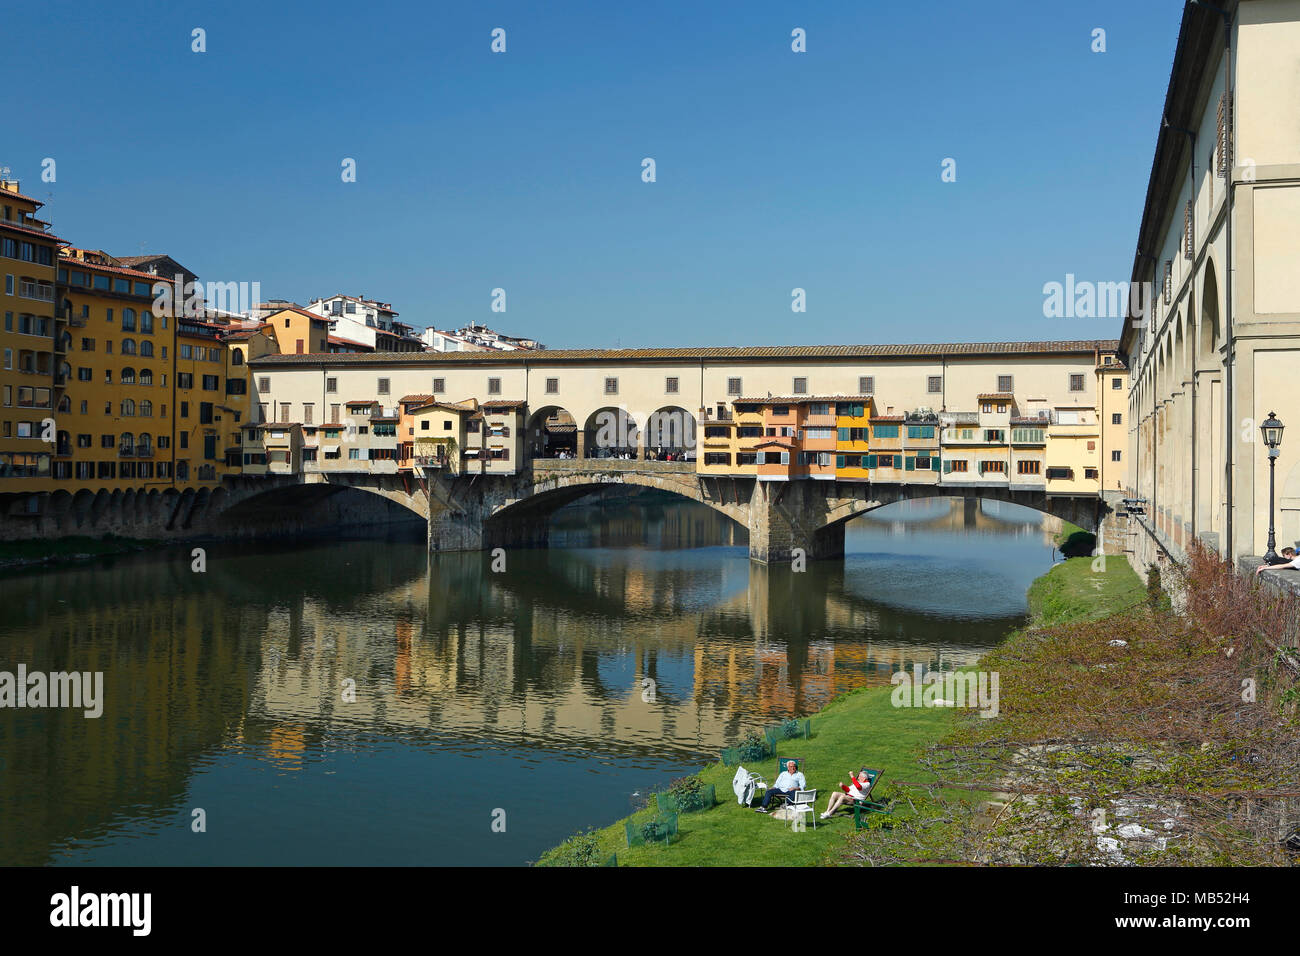 Ponte Vecchio, bridge over the river Arno, Florence, Italy Stock Photo